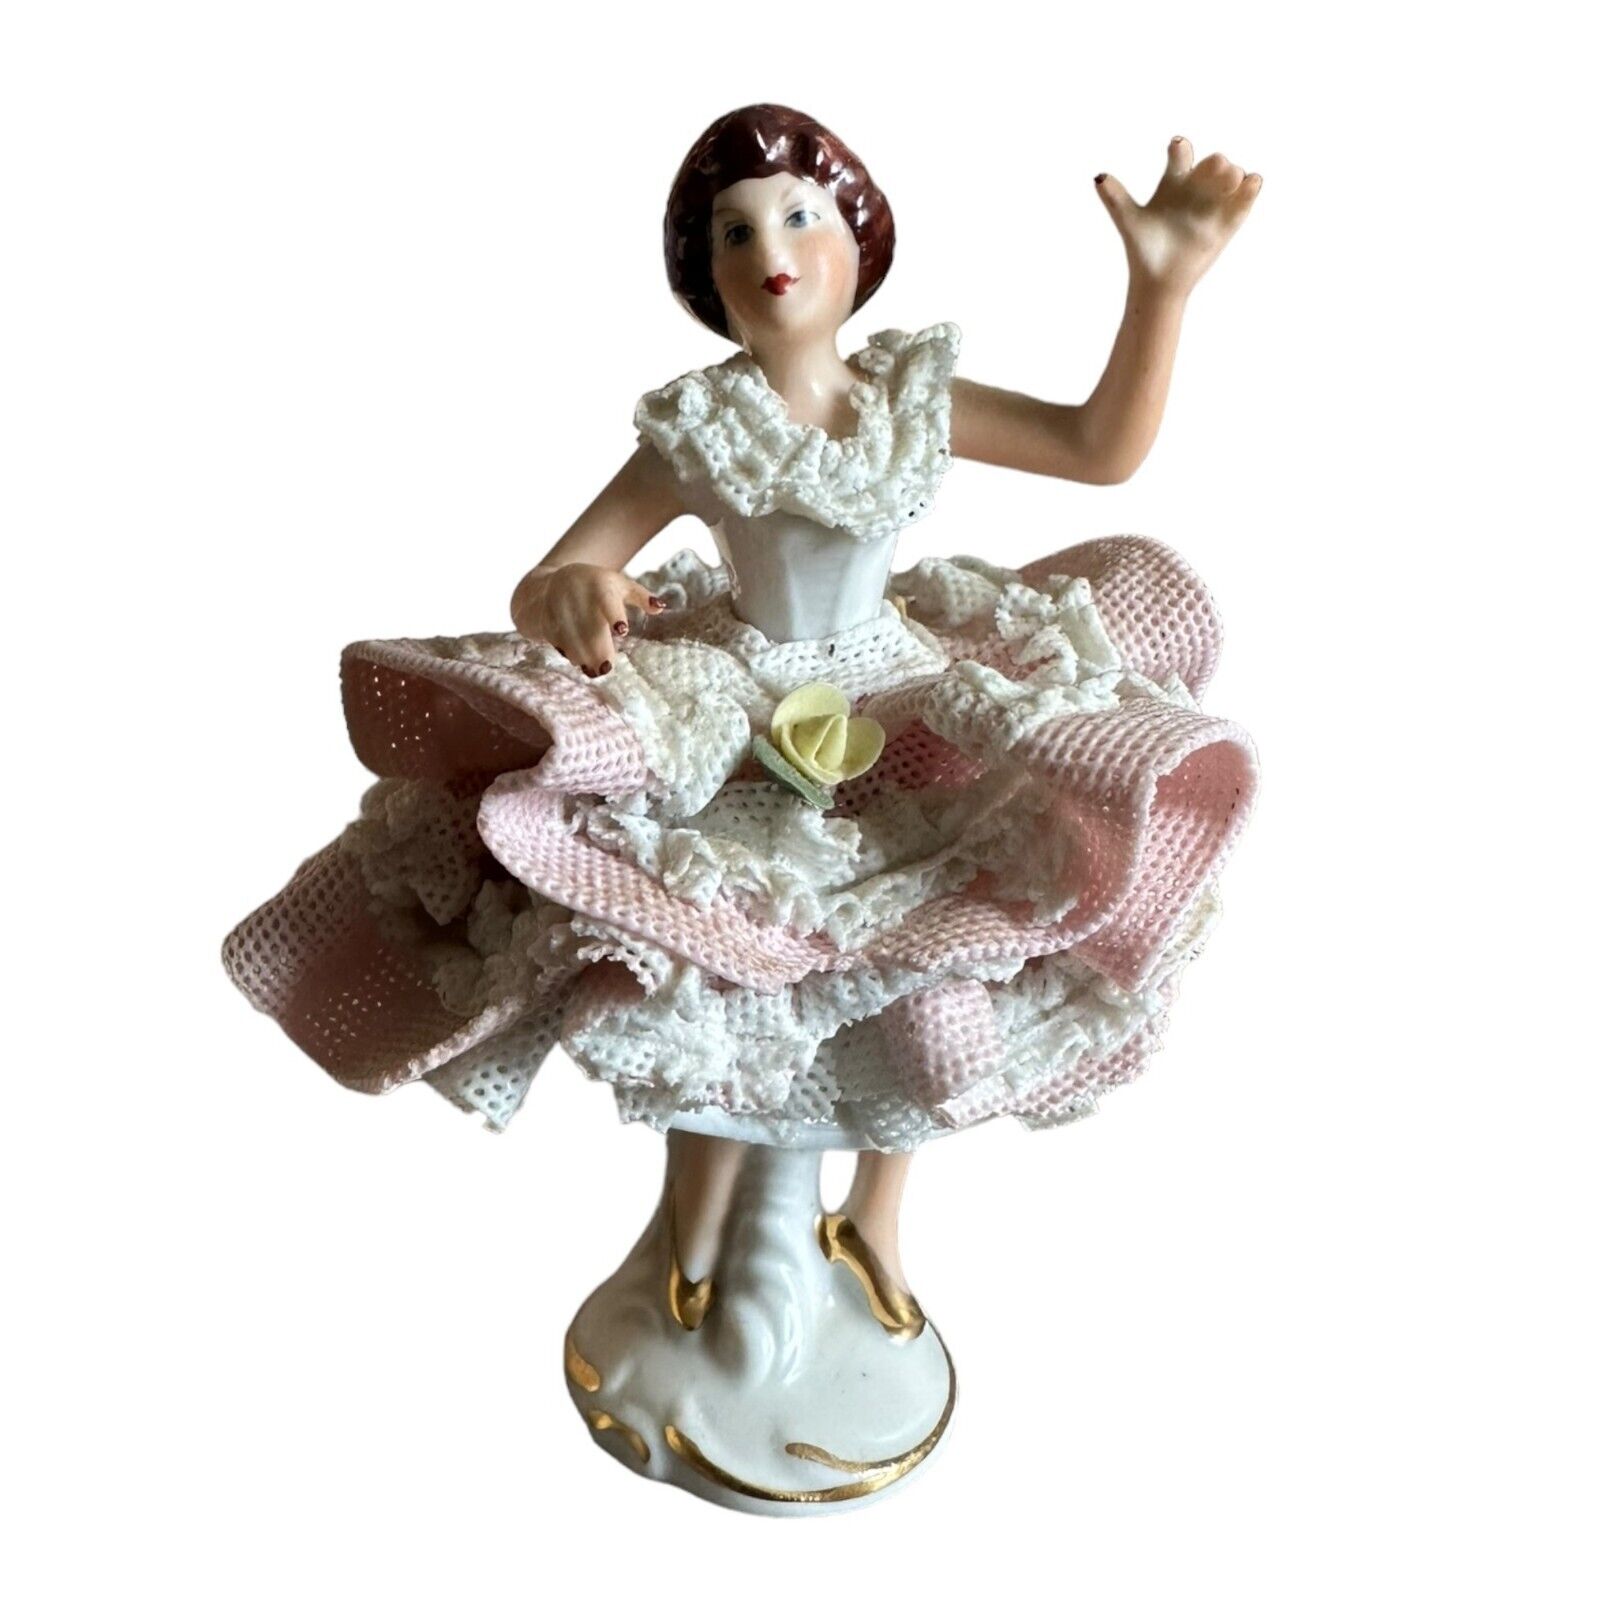 Vintage Dresden Lace Porcelain Figurine in excellent condition